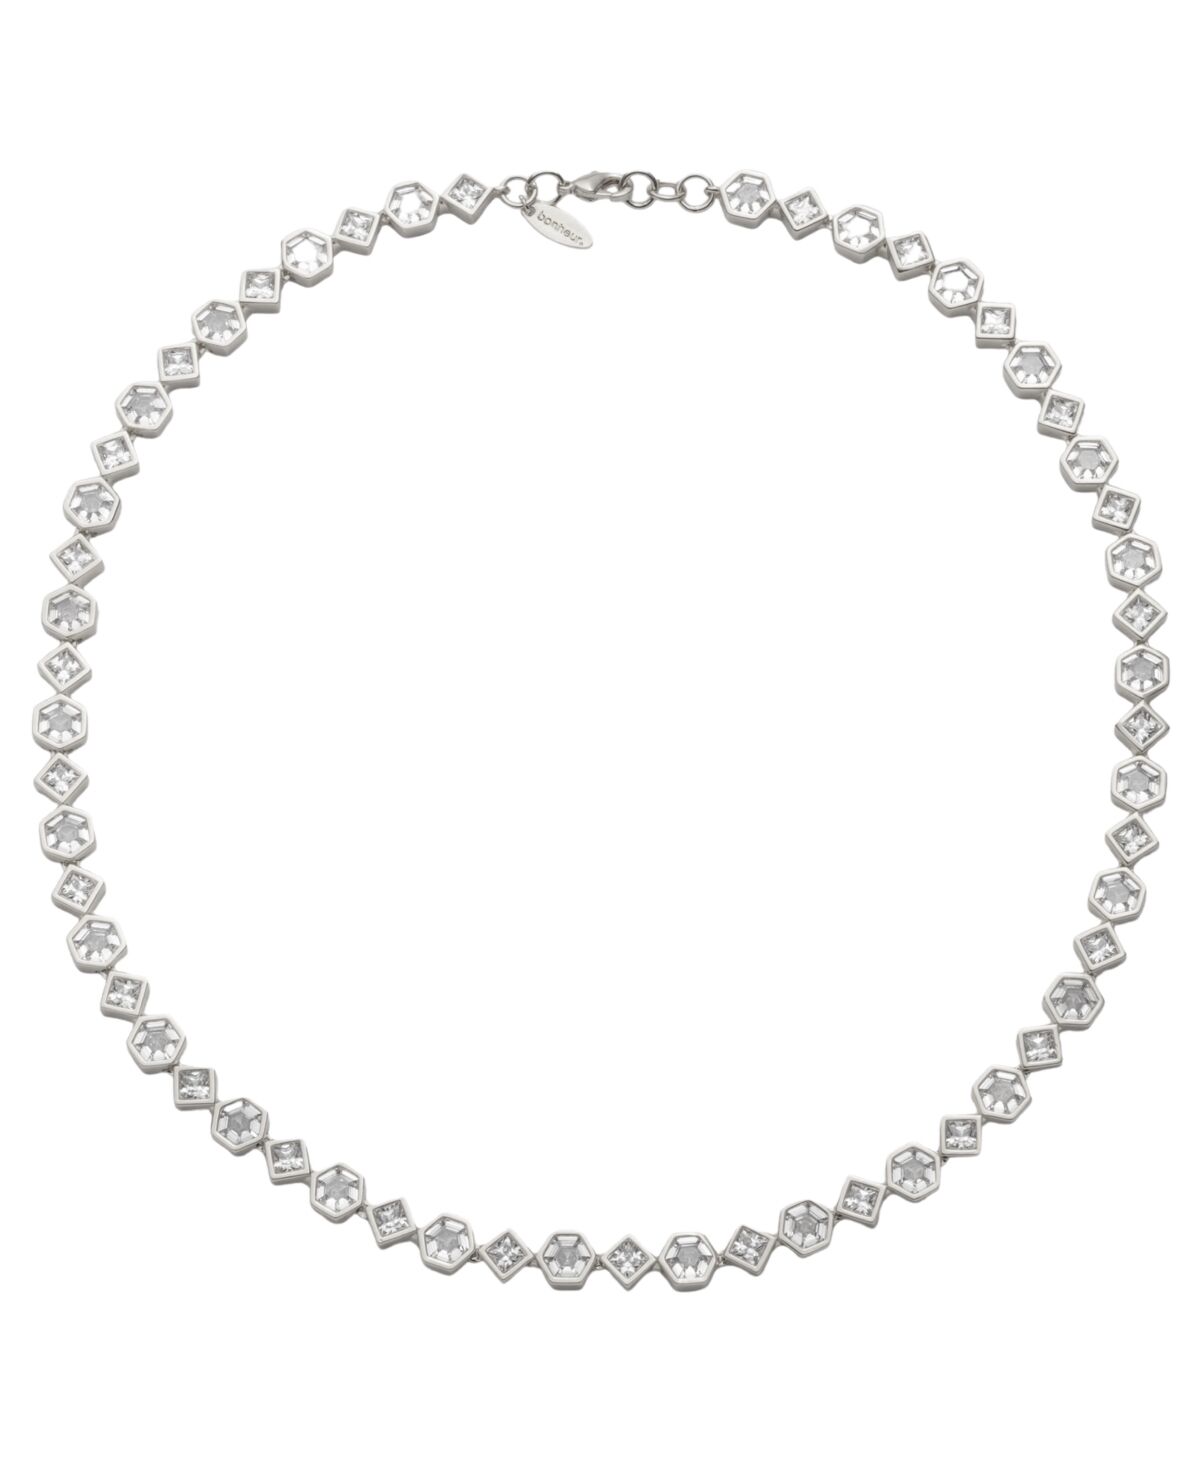 Bonheur Jewelry Milou Bezel Set Crystal Necklace - Rhodium Plated Brass